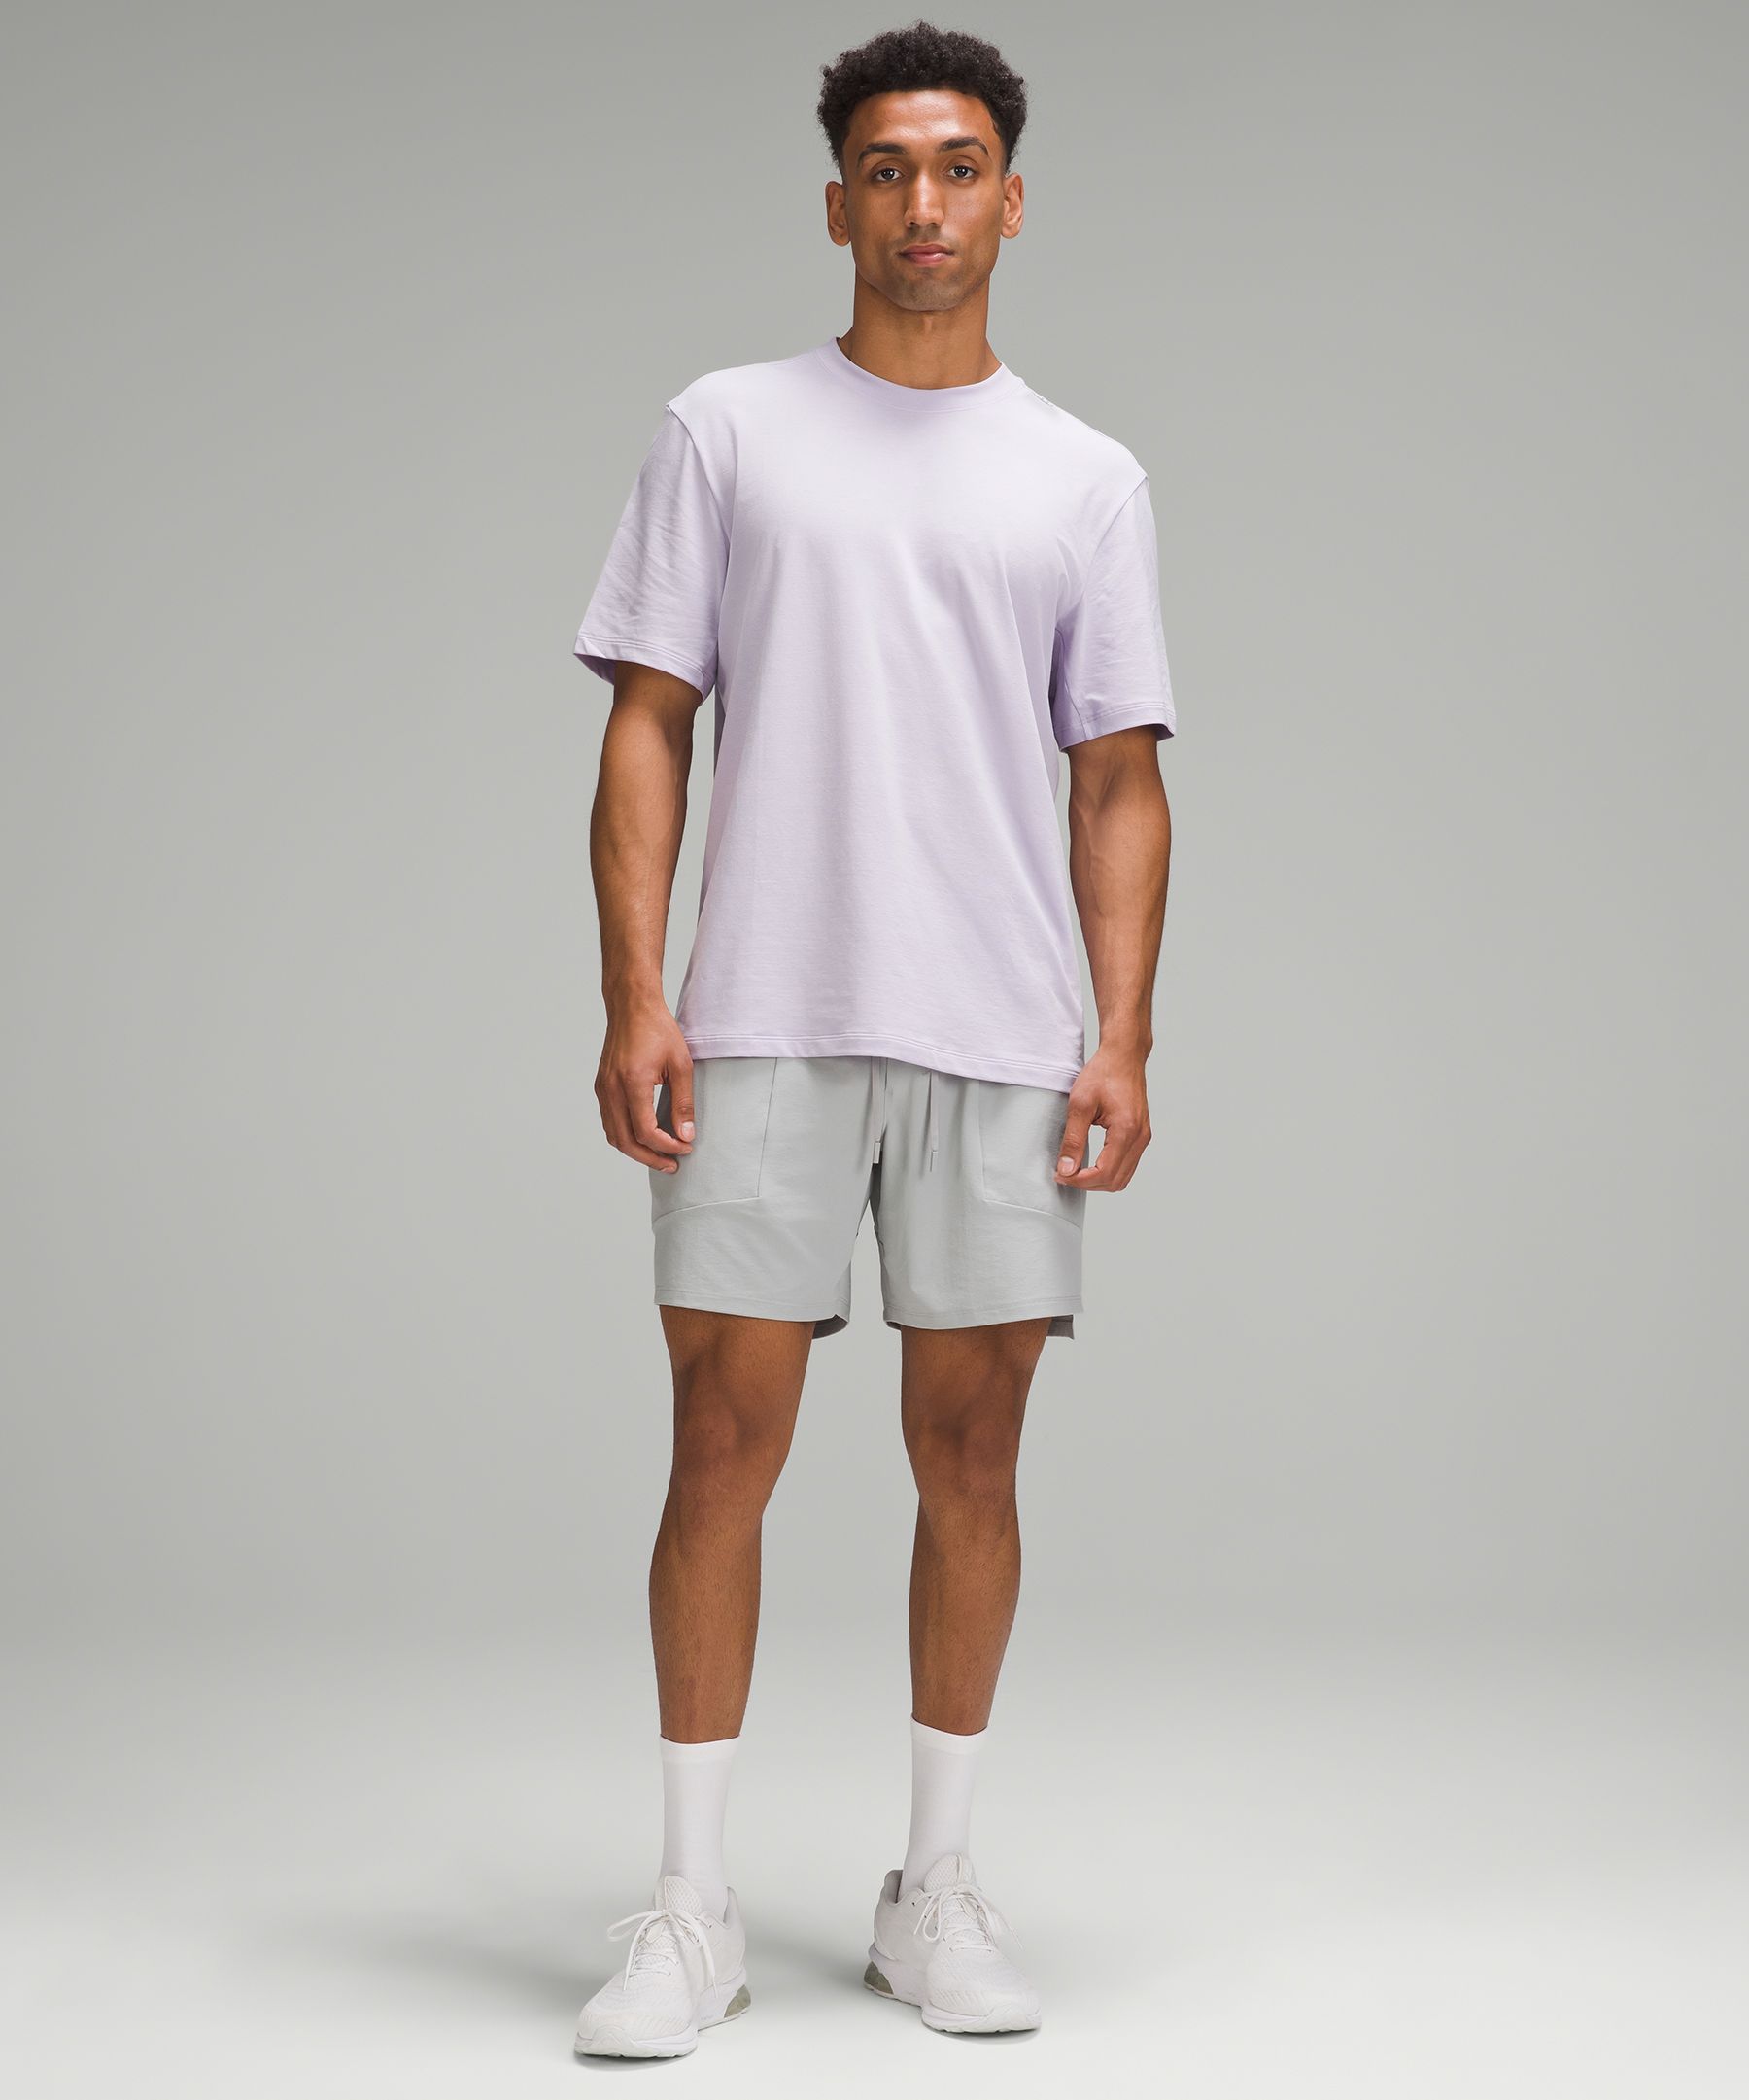 Zeroed Short-Sleeve Shirt | Men's Short Sleeve Shirts & Tee's